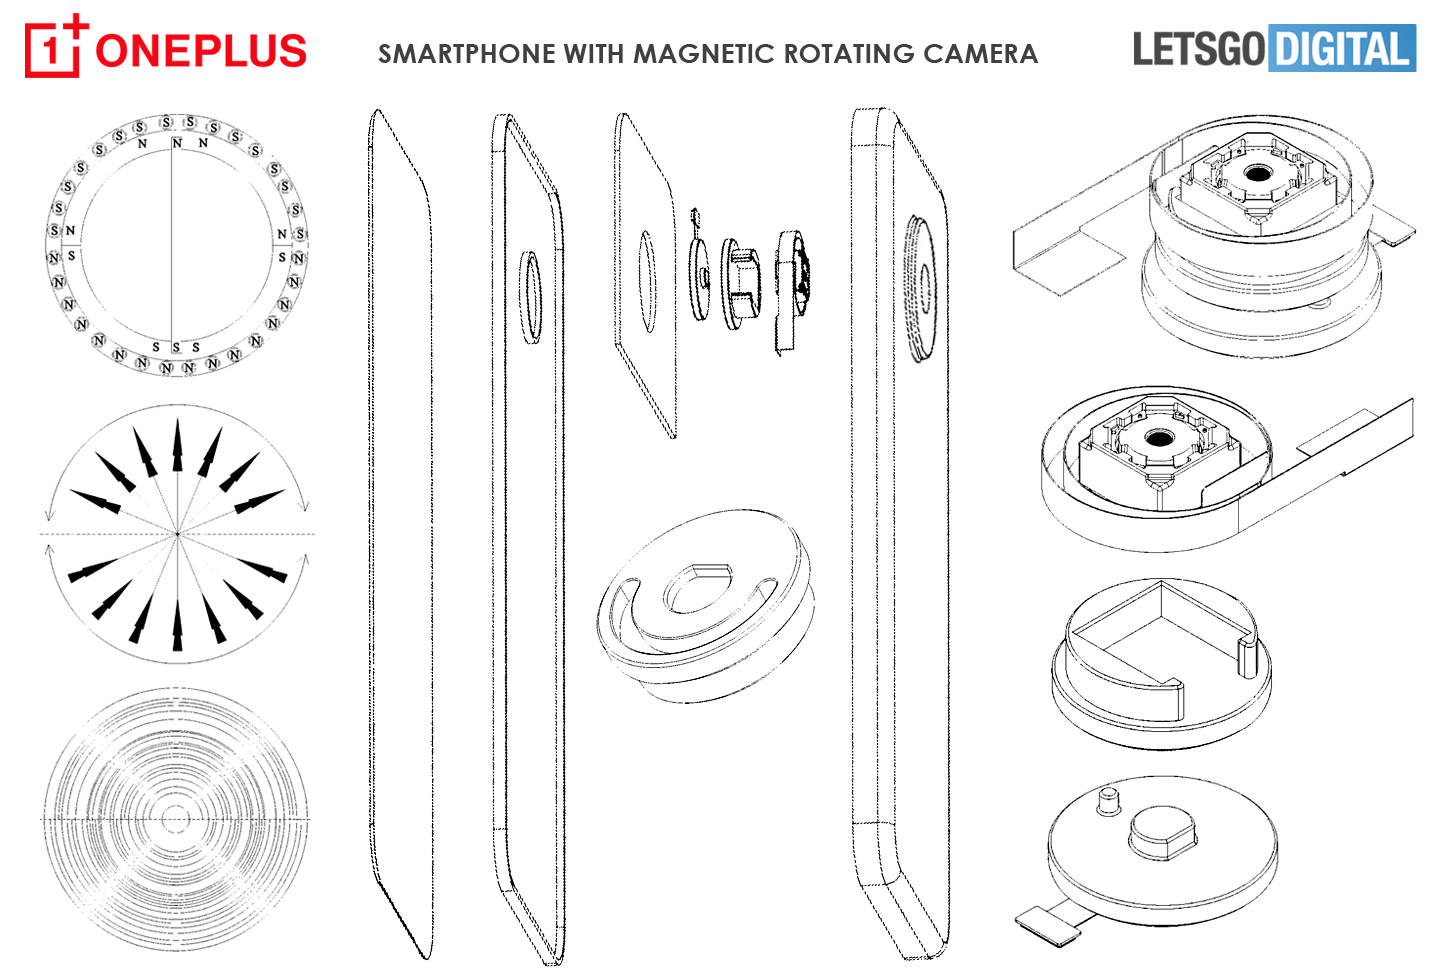 OnePlus smartphone rotating camera